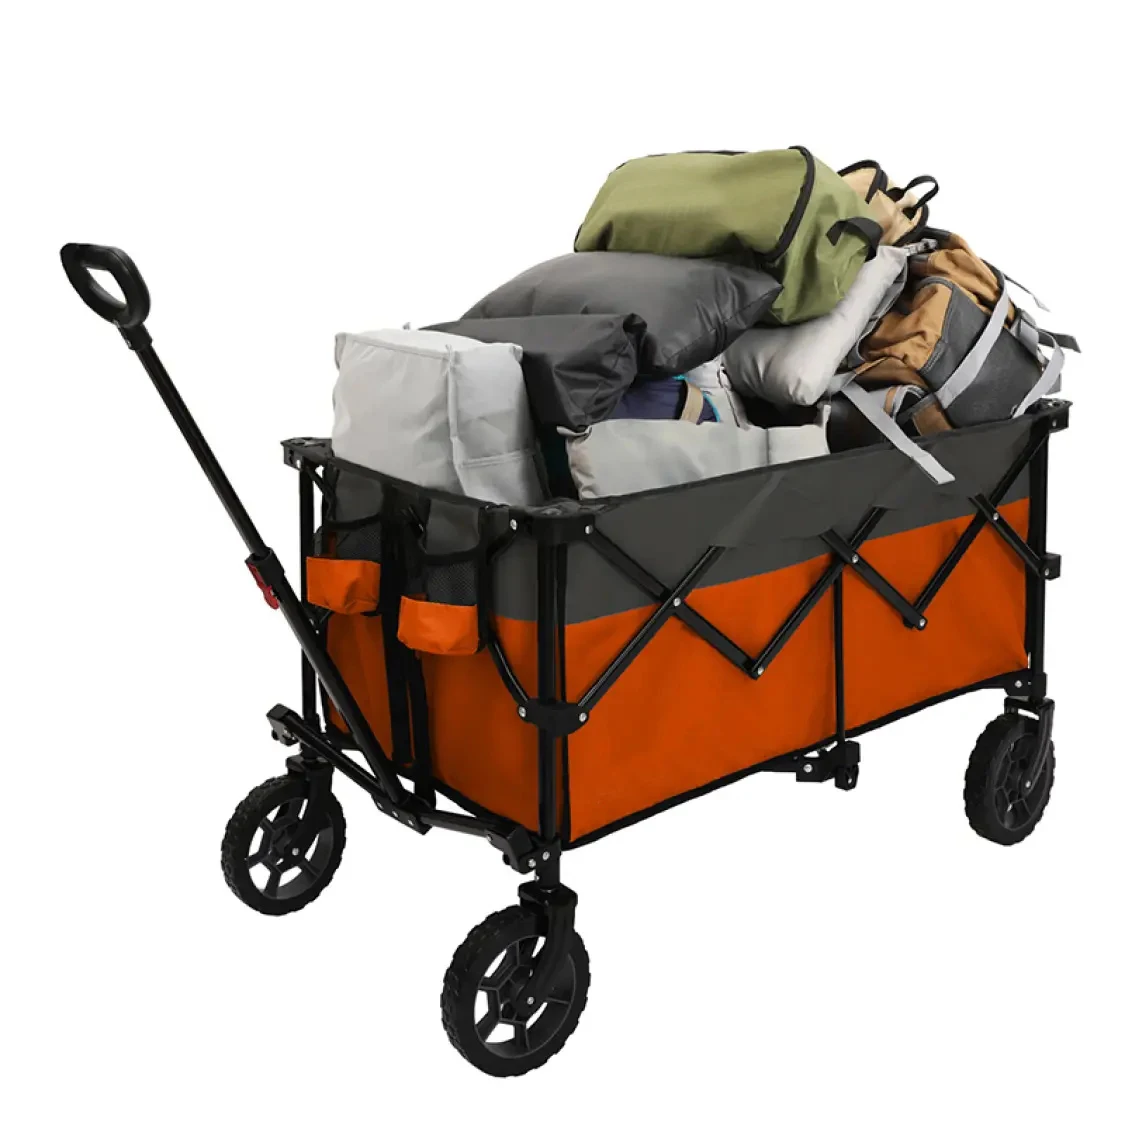 Camping cart (3).jpg